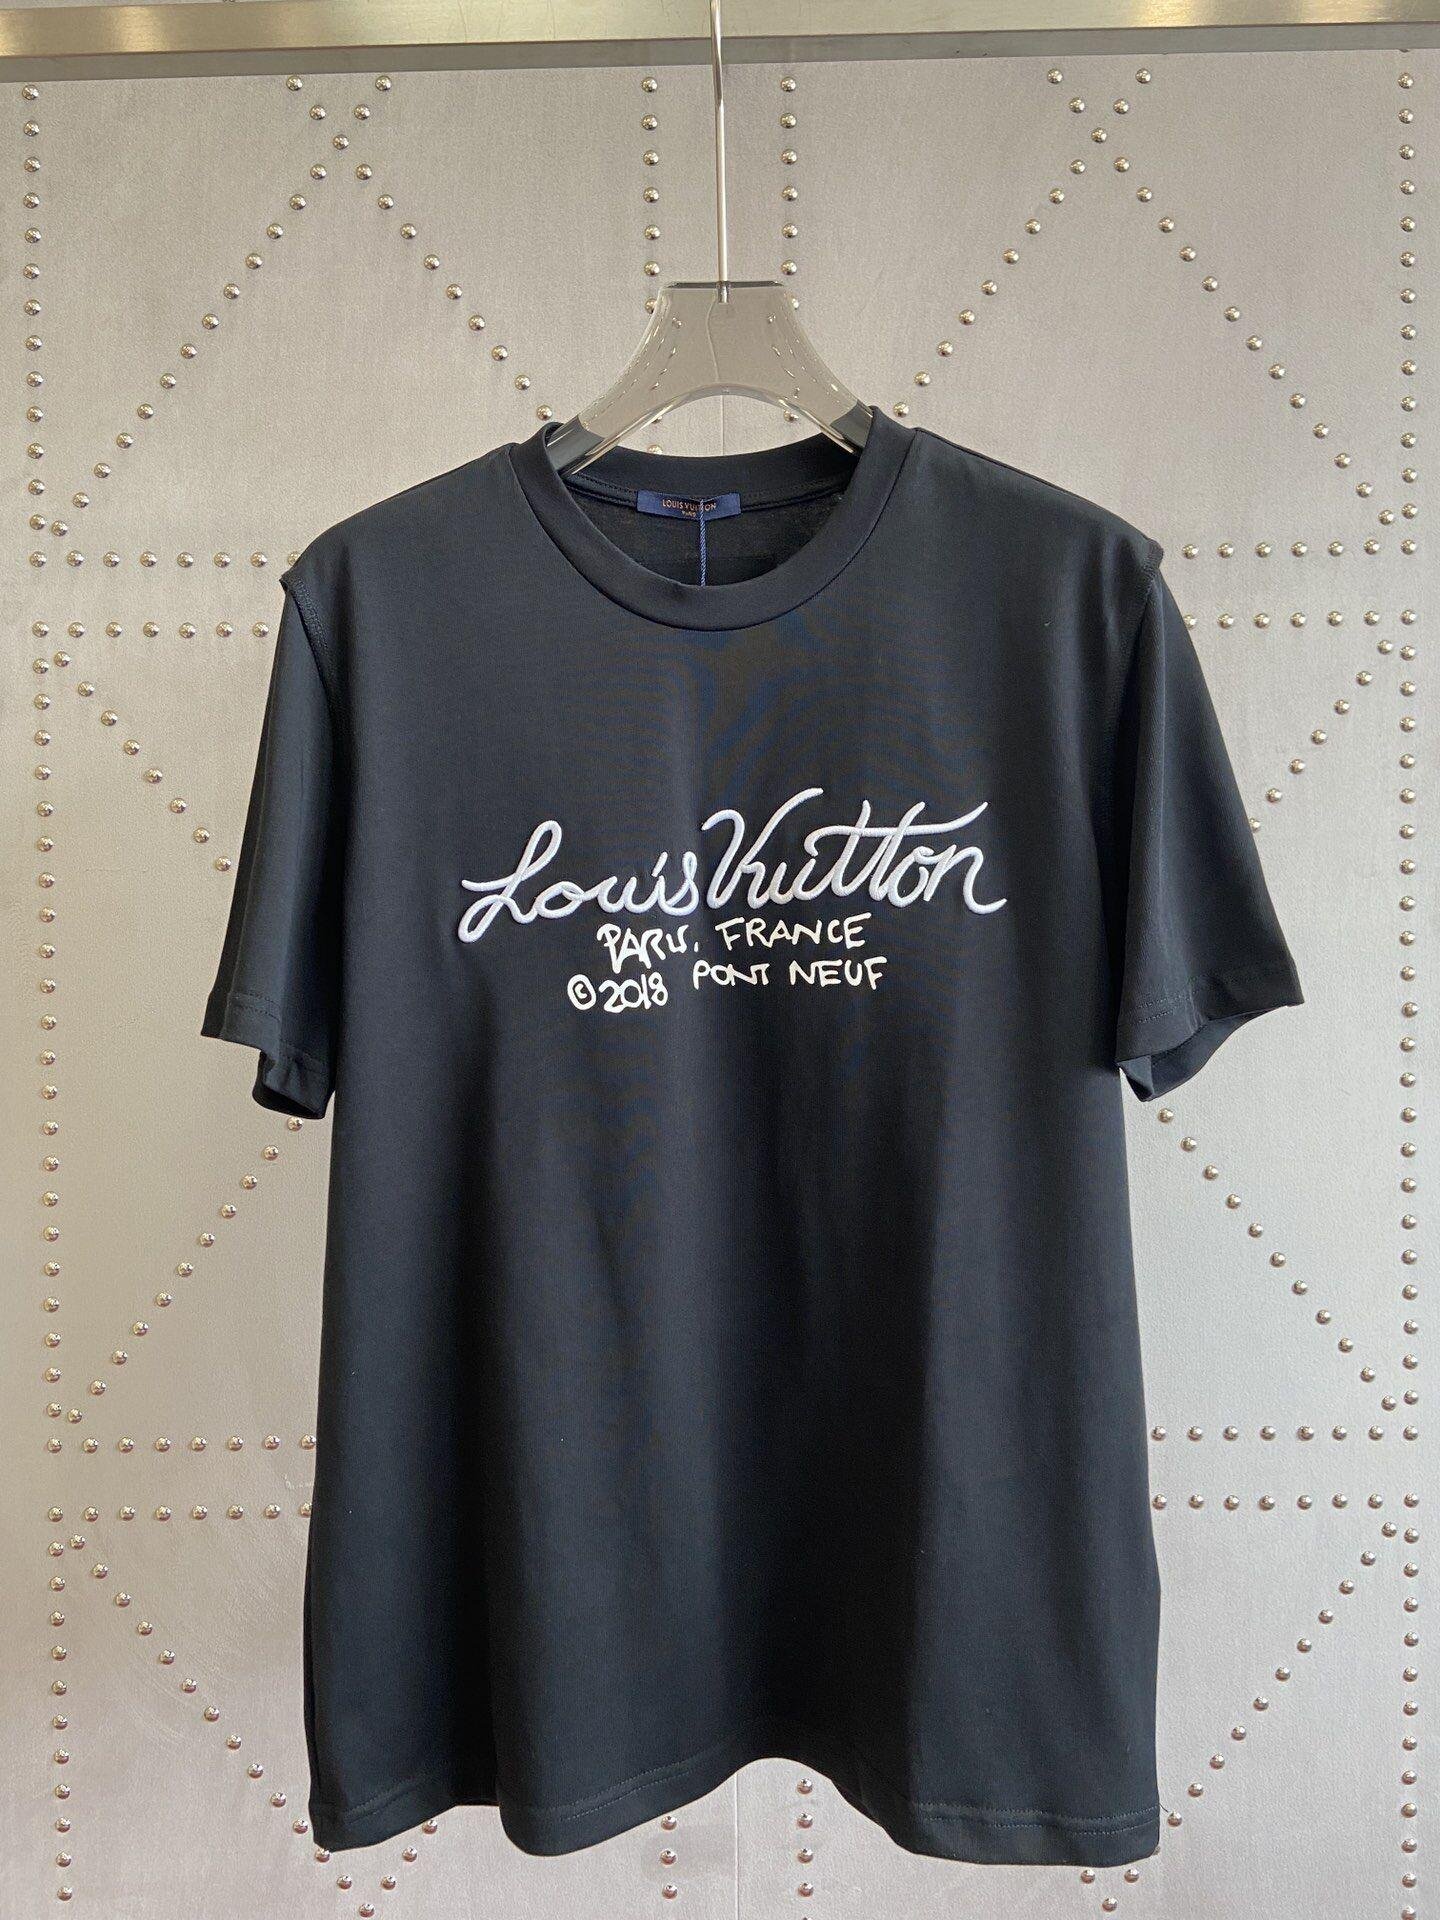 ignature print embroidery t-shirt shirt en tshirt 1A7XNG - lv (China ...